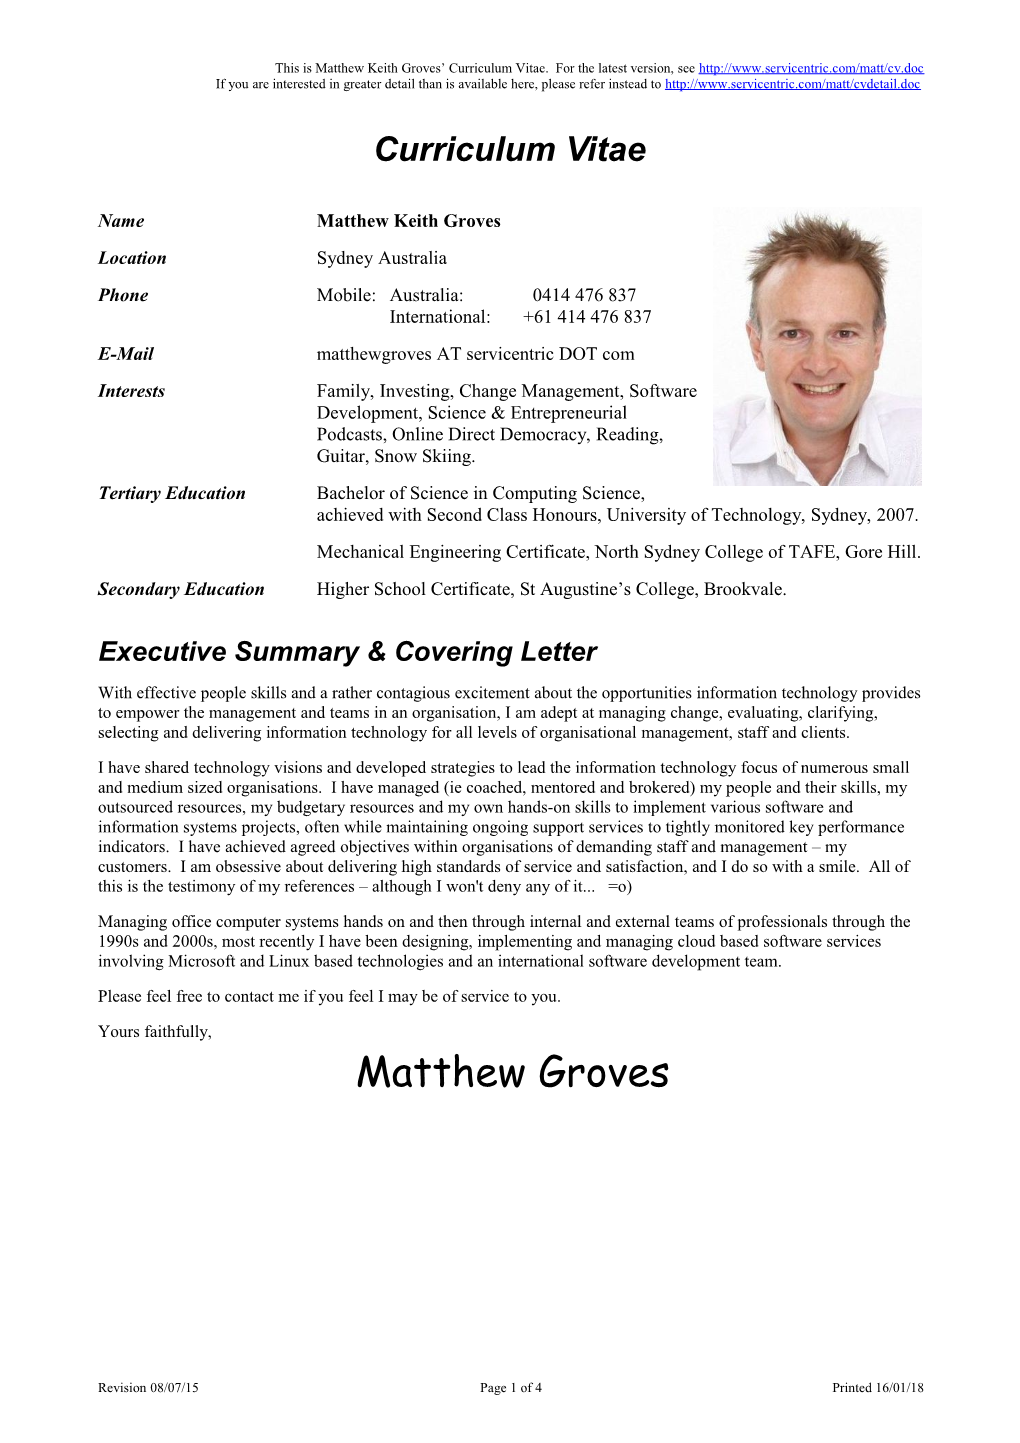 Matt Groves CV in Detail